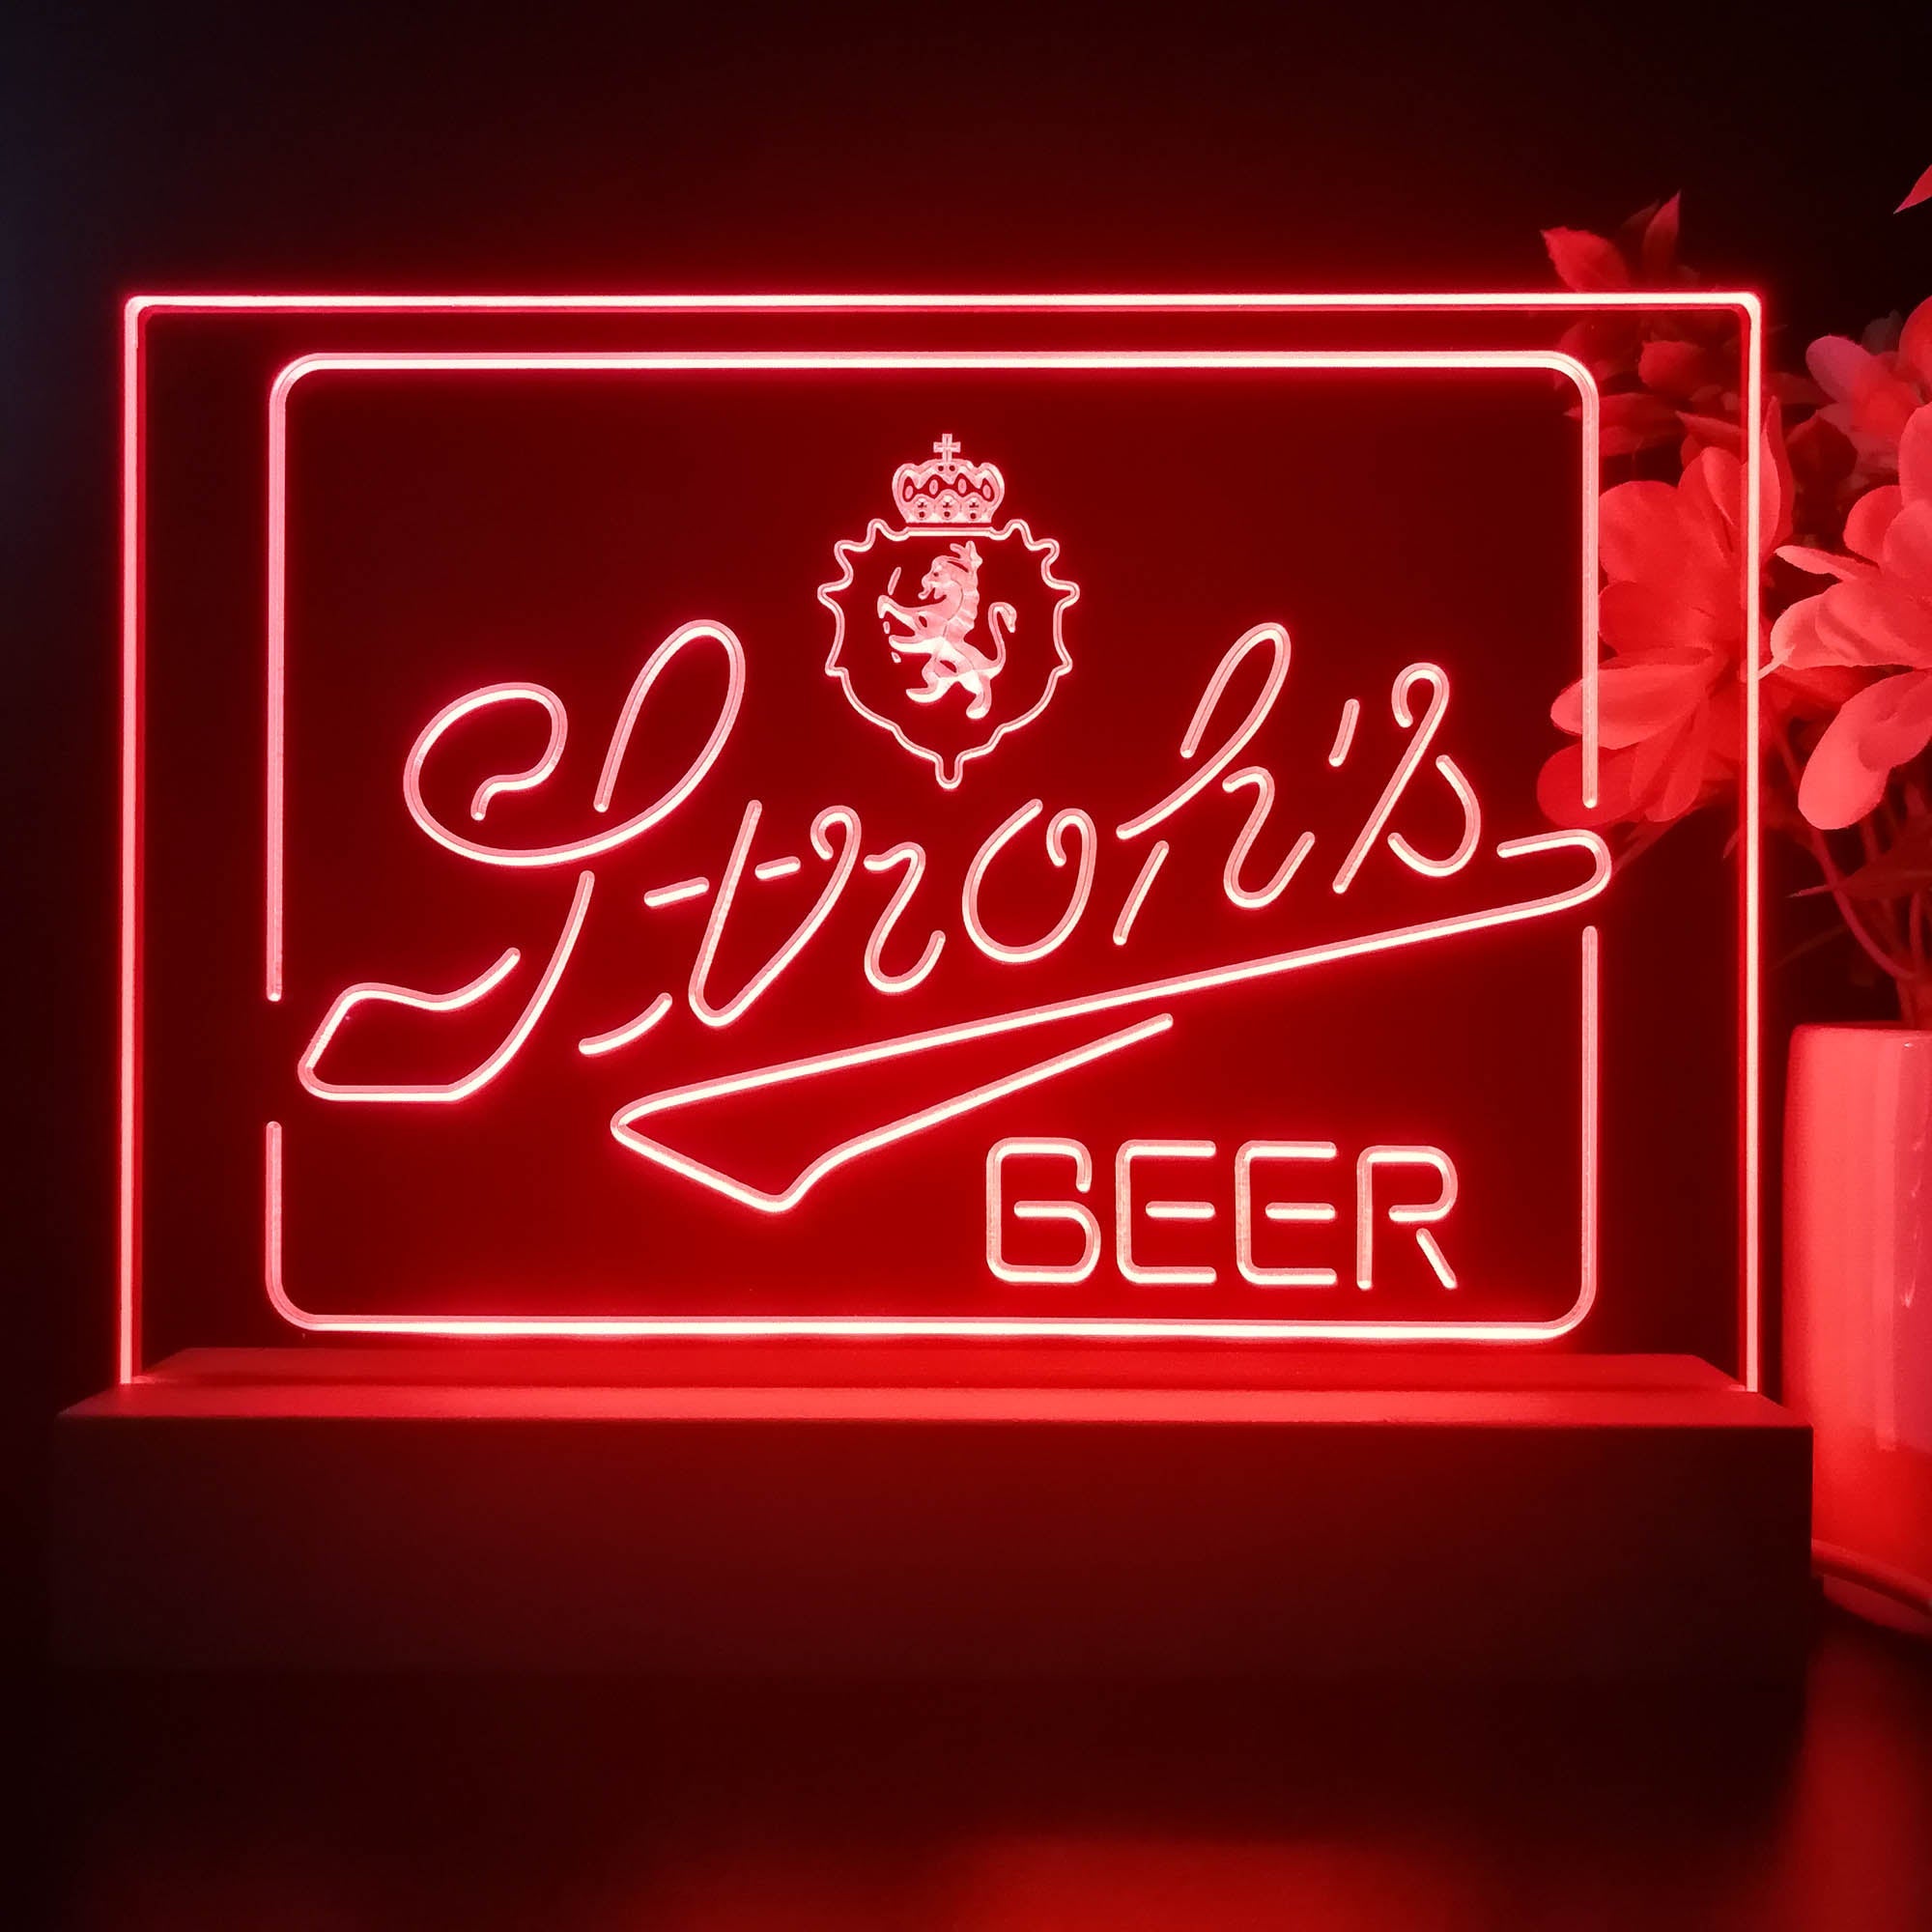 Stroh's Beer Bar Neon Sign Pub Bar Lamp